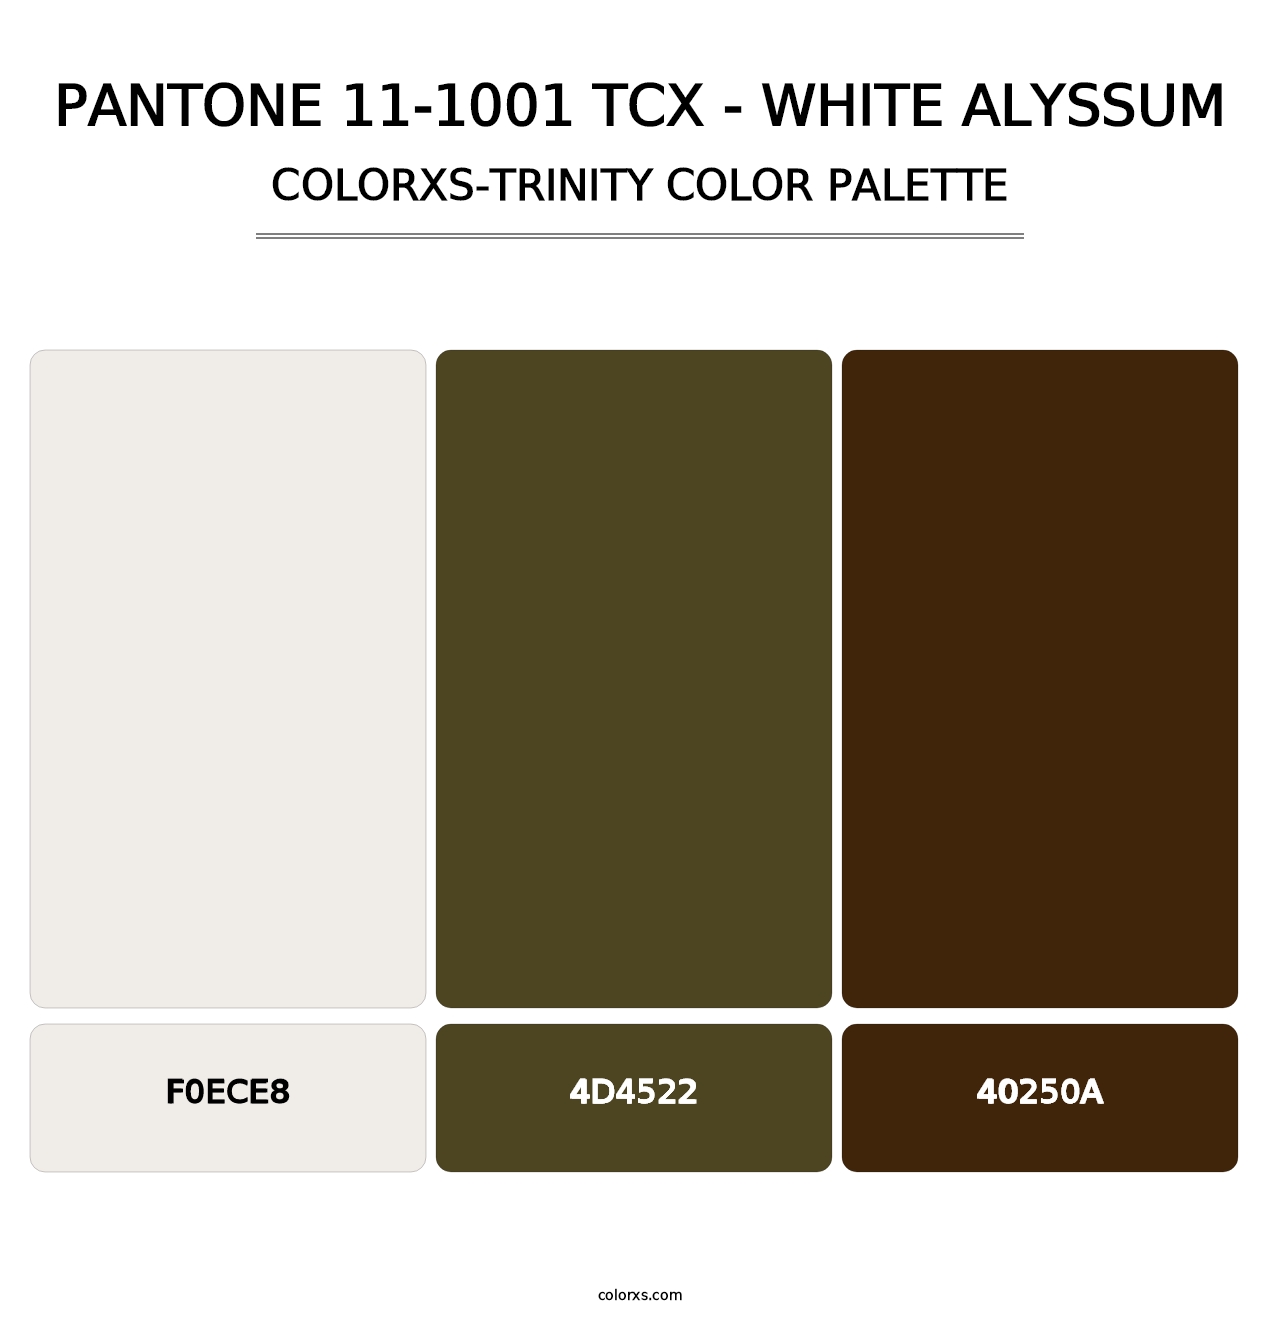 PANTONE 11-1001 TCX - White Alyssum - Colorxs Trinity Palette